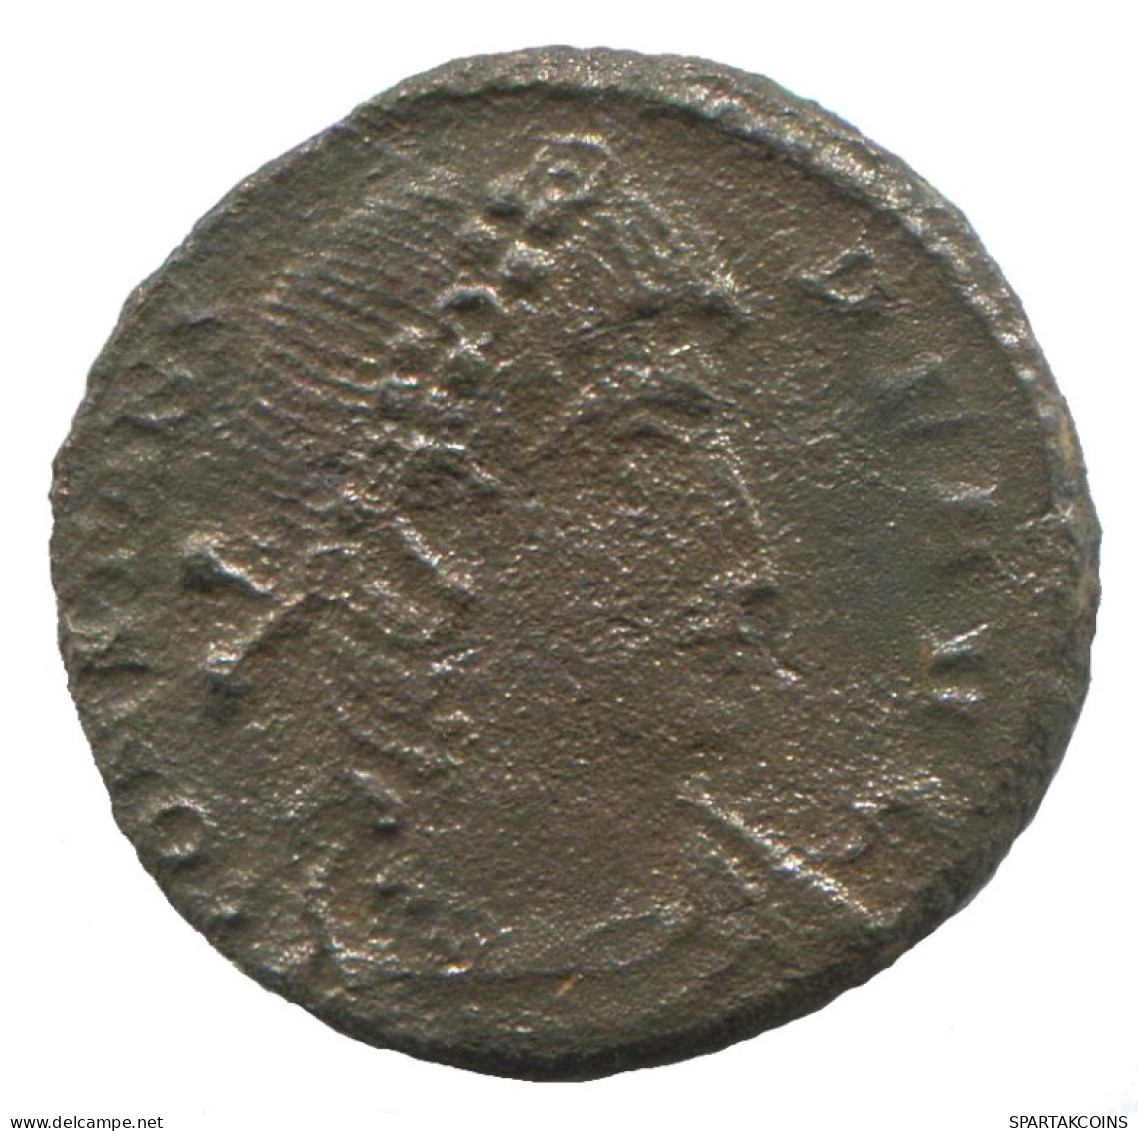 CONSTANTIUS II THESSALONICA SMTSΕ VICTORIAEDDAVGGGNN 2.2g/17m #ANN1644.30.D.A - El Imperio Christiano (307 / 363)